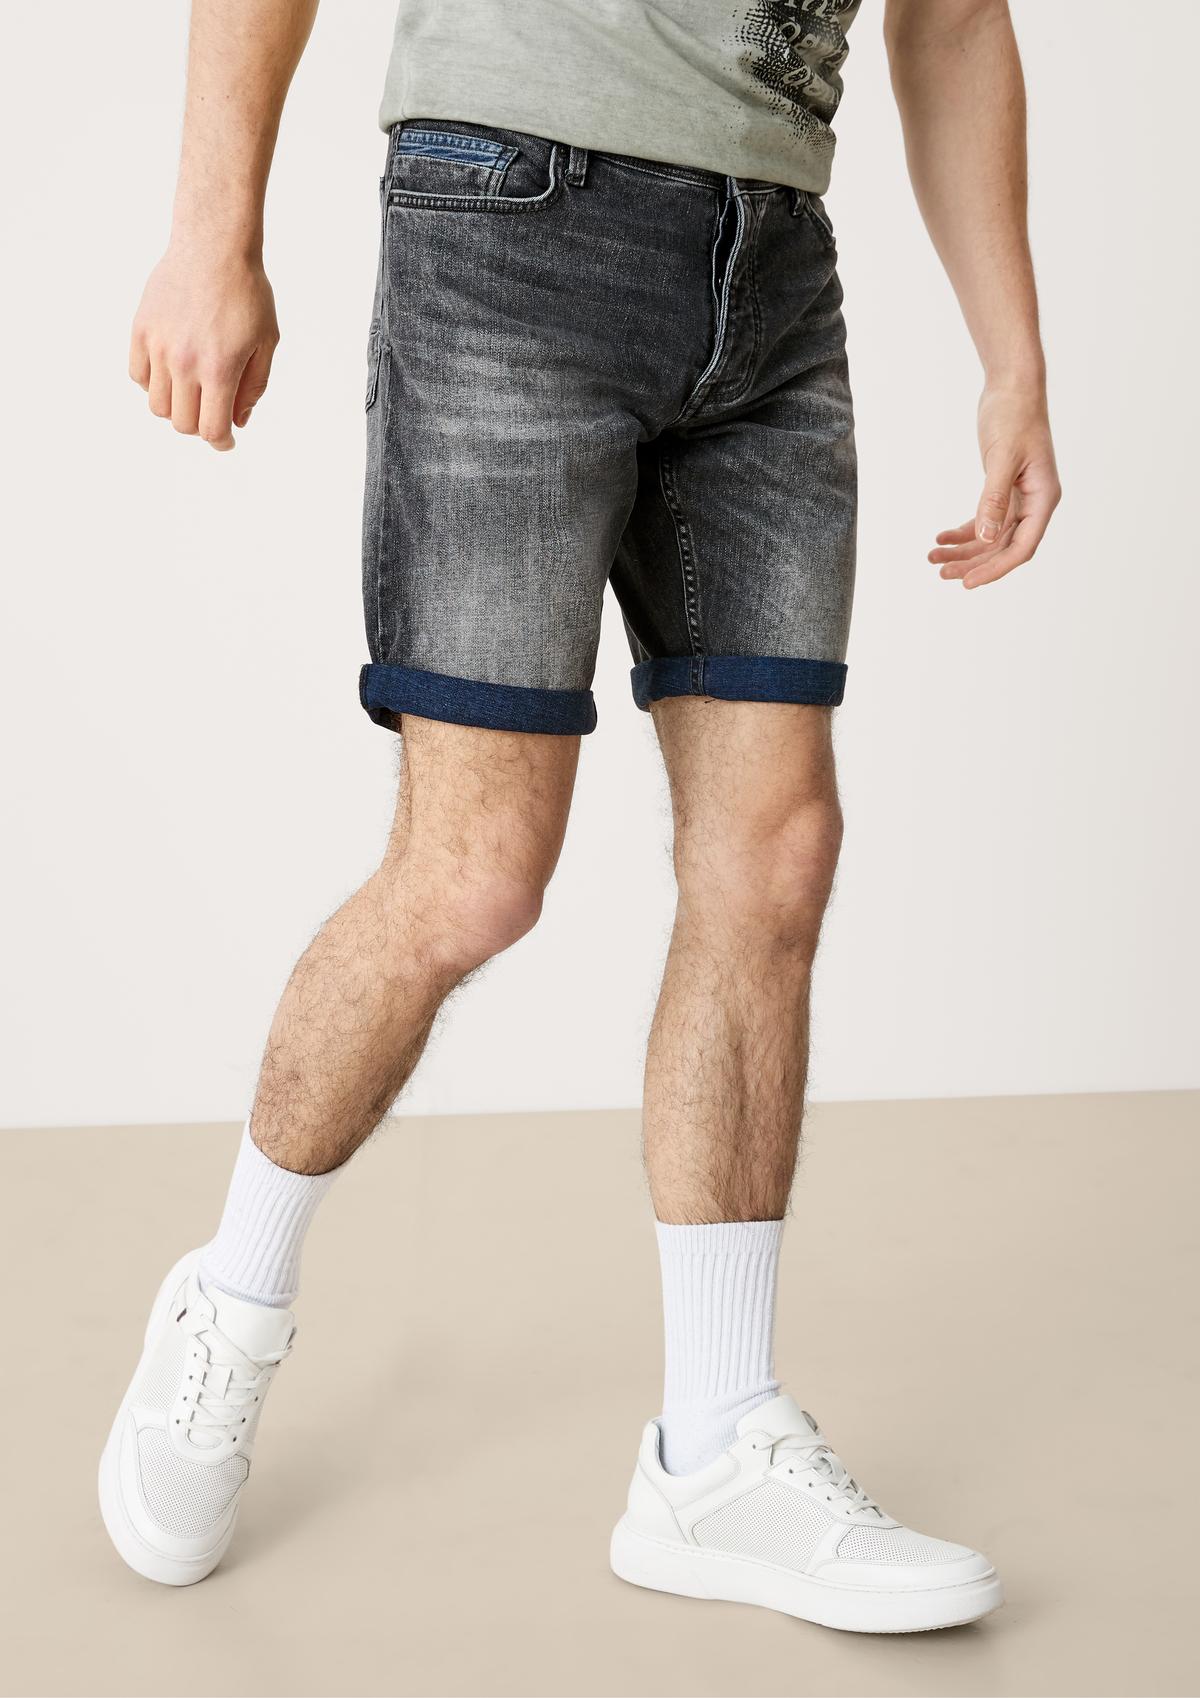 s.Oliver Jeans-Bermuda John / Regular Fit / Mid Rise / Slim Leg